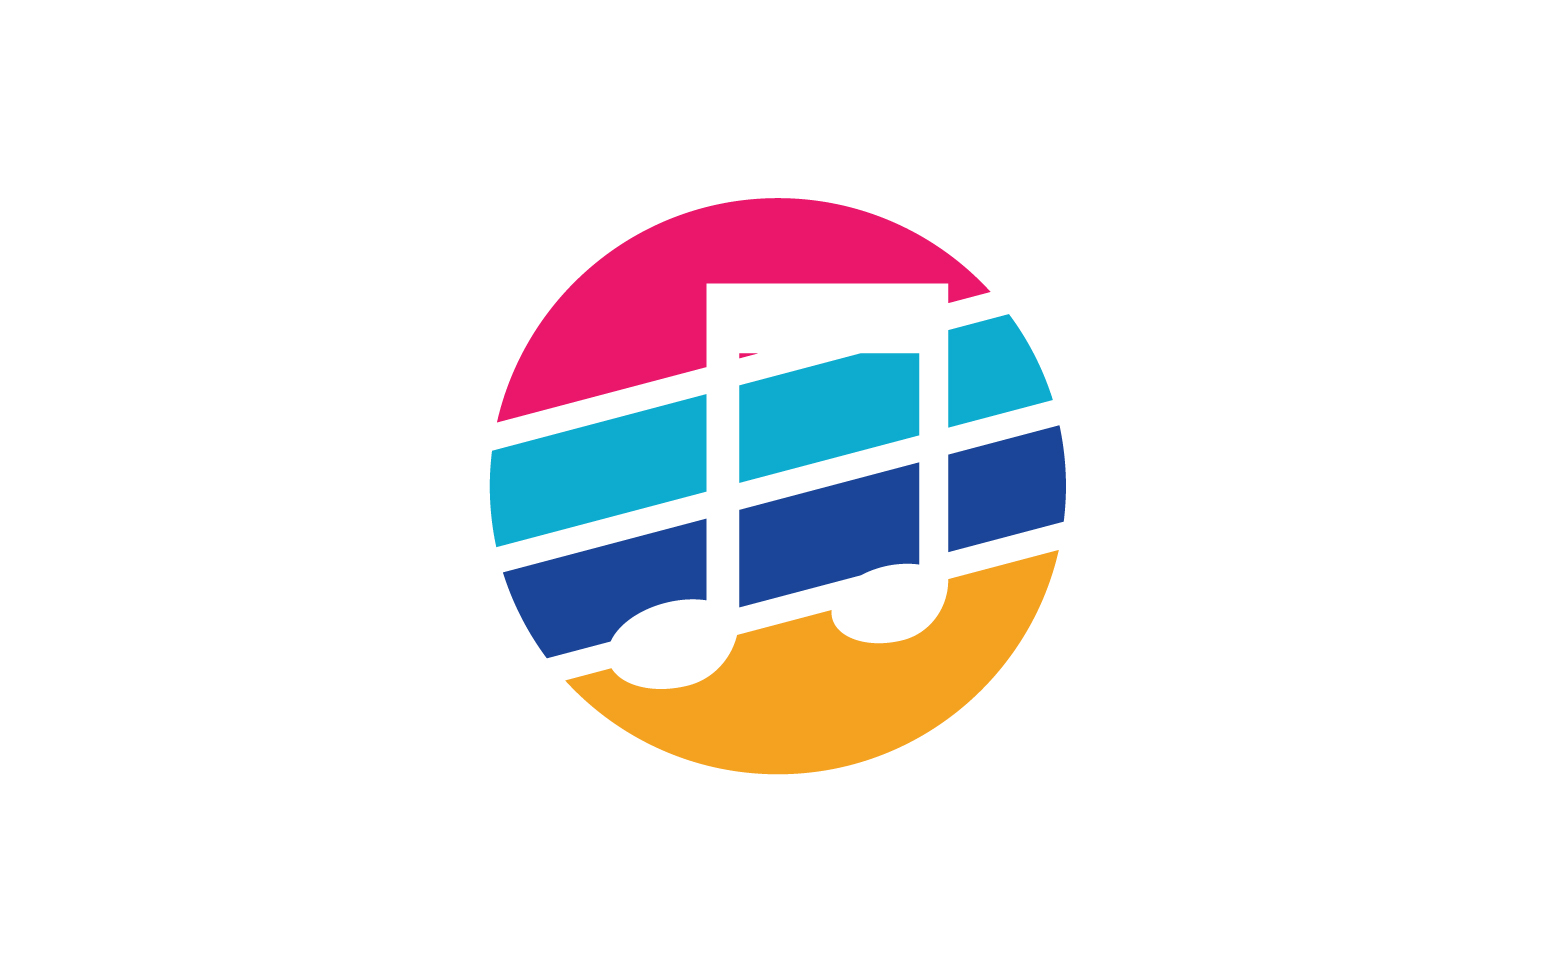 Music sound player app icon logo v.4